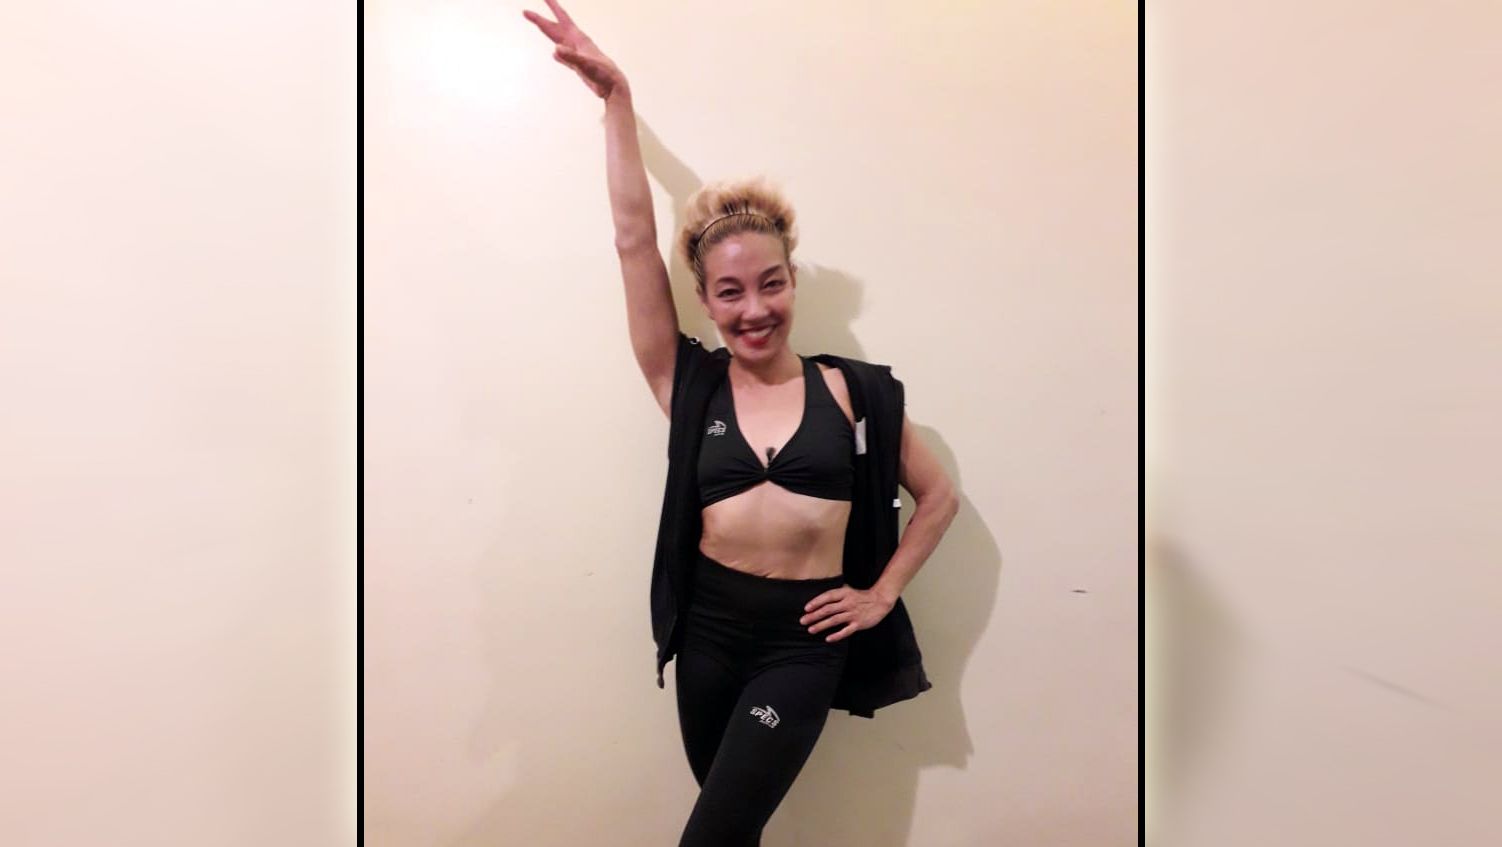 Sebagai instruktur senam aerobic, artis senior Vicky Burki dikira masih ABG saat lincah memamerkan kepiawiannya melakukan tarian tiang atau pole dance. Copyright: © Shintya Anya Maharani/Indosport.com